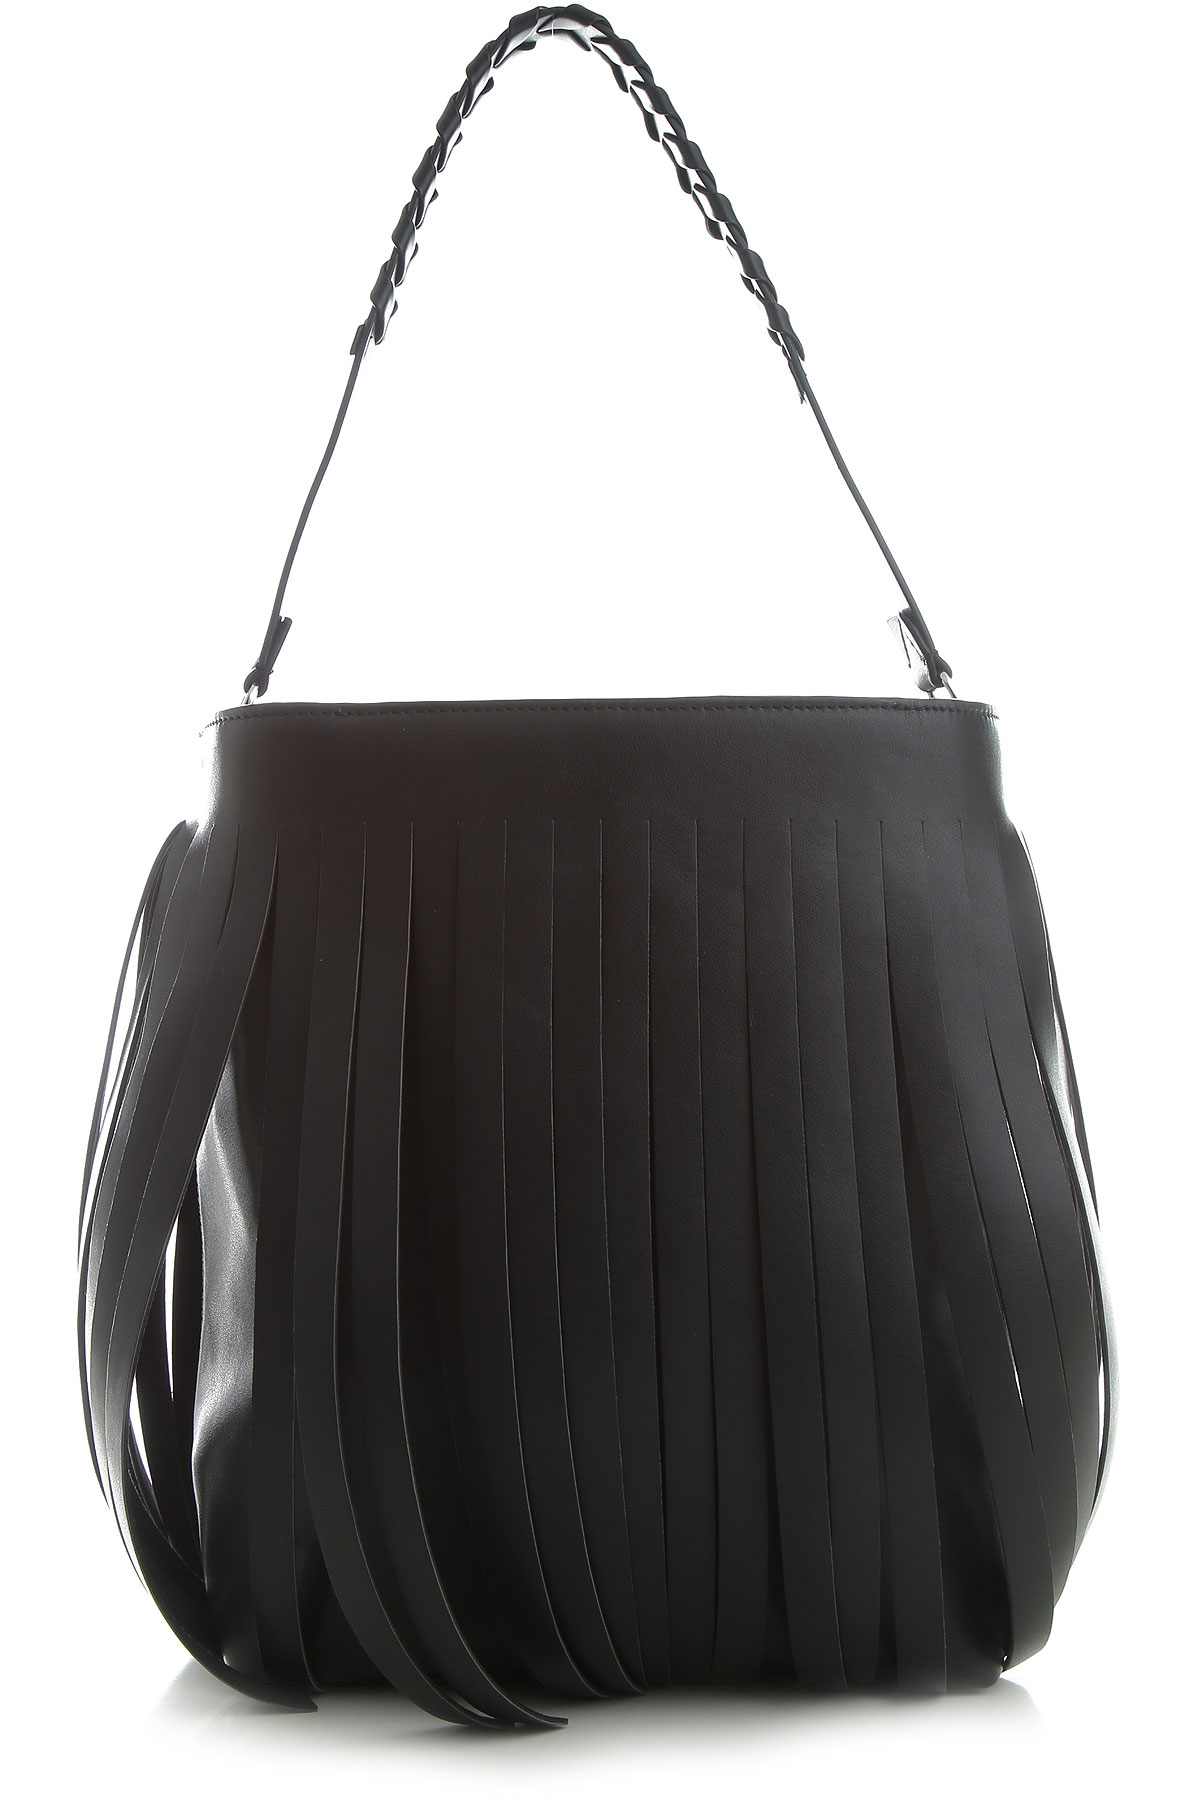 Handbags Karl Lagerfeld, Style code: 216w3049-a620